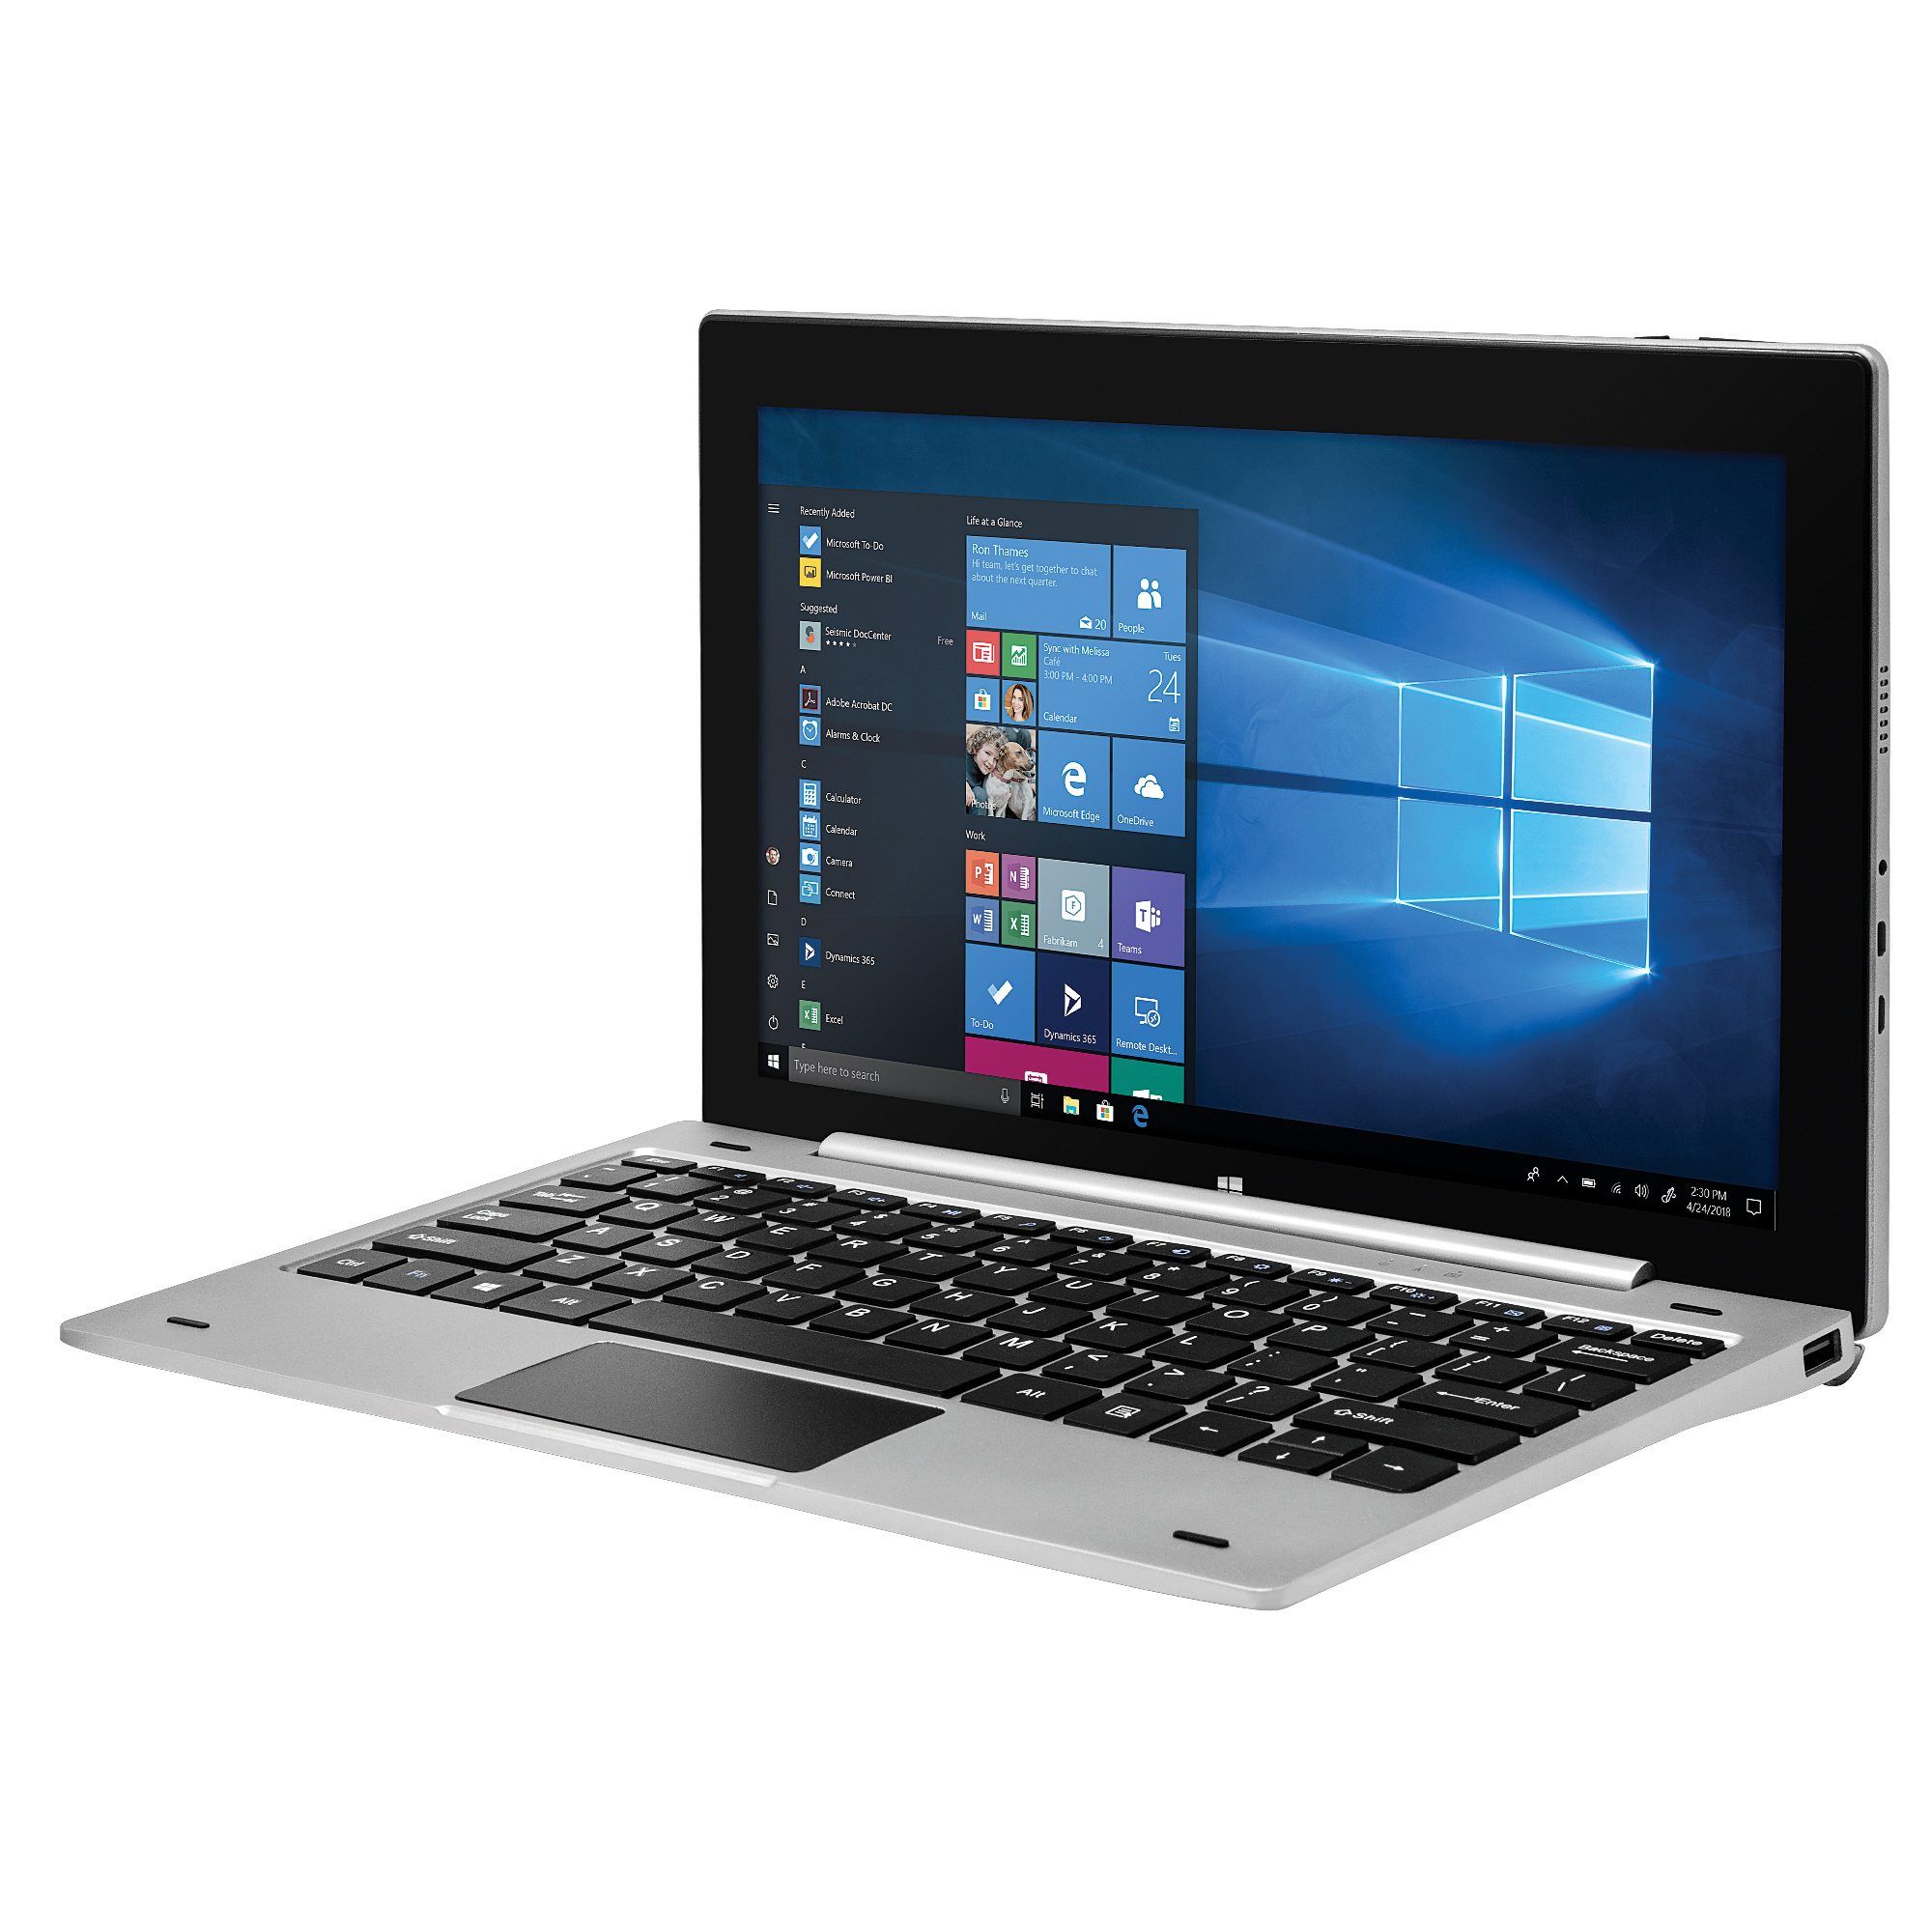 EVOO 11.6" Windows Tablet with Keyboard, Full HD, Intel Processor, Quad Core, 32GB Storage, Micro HDMI, Dual Cameras, Windows 10 Home, Silver - image 1 of 2